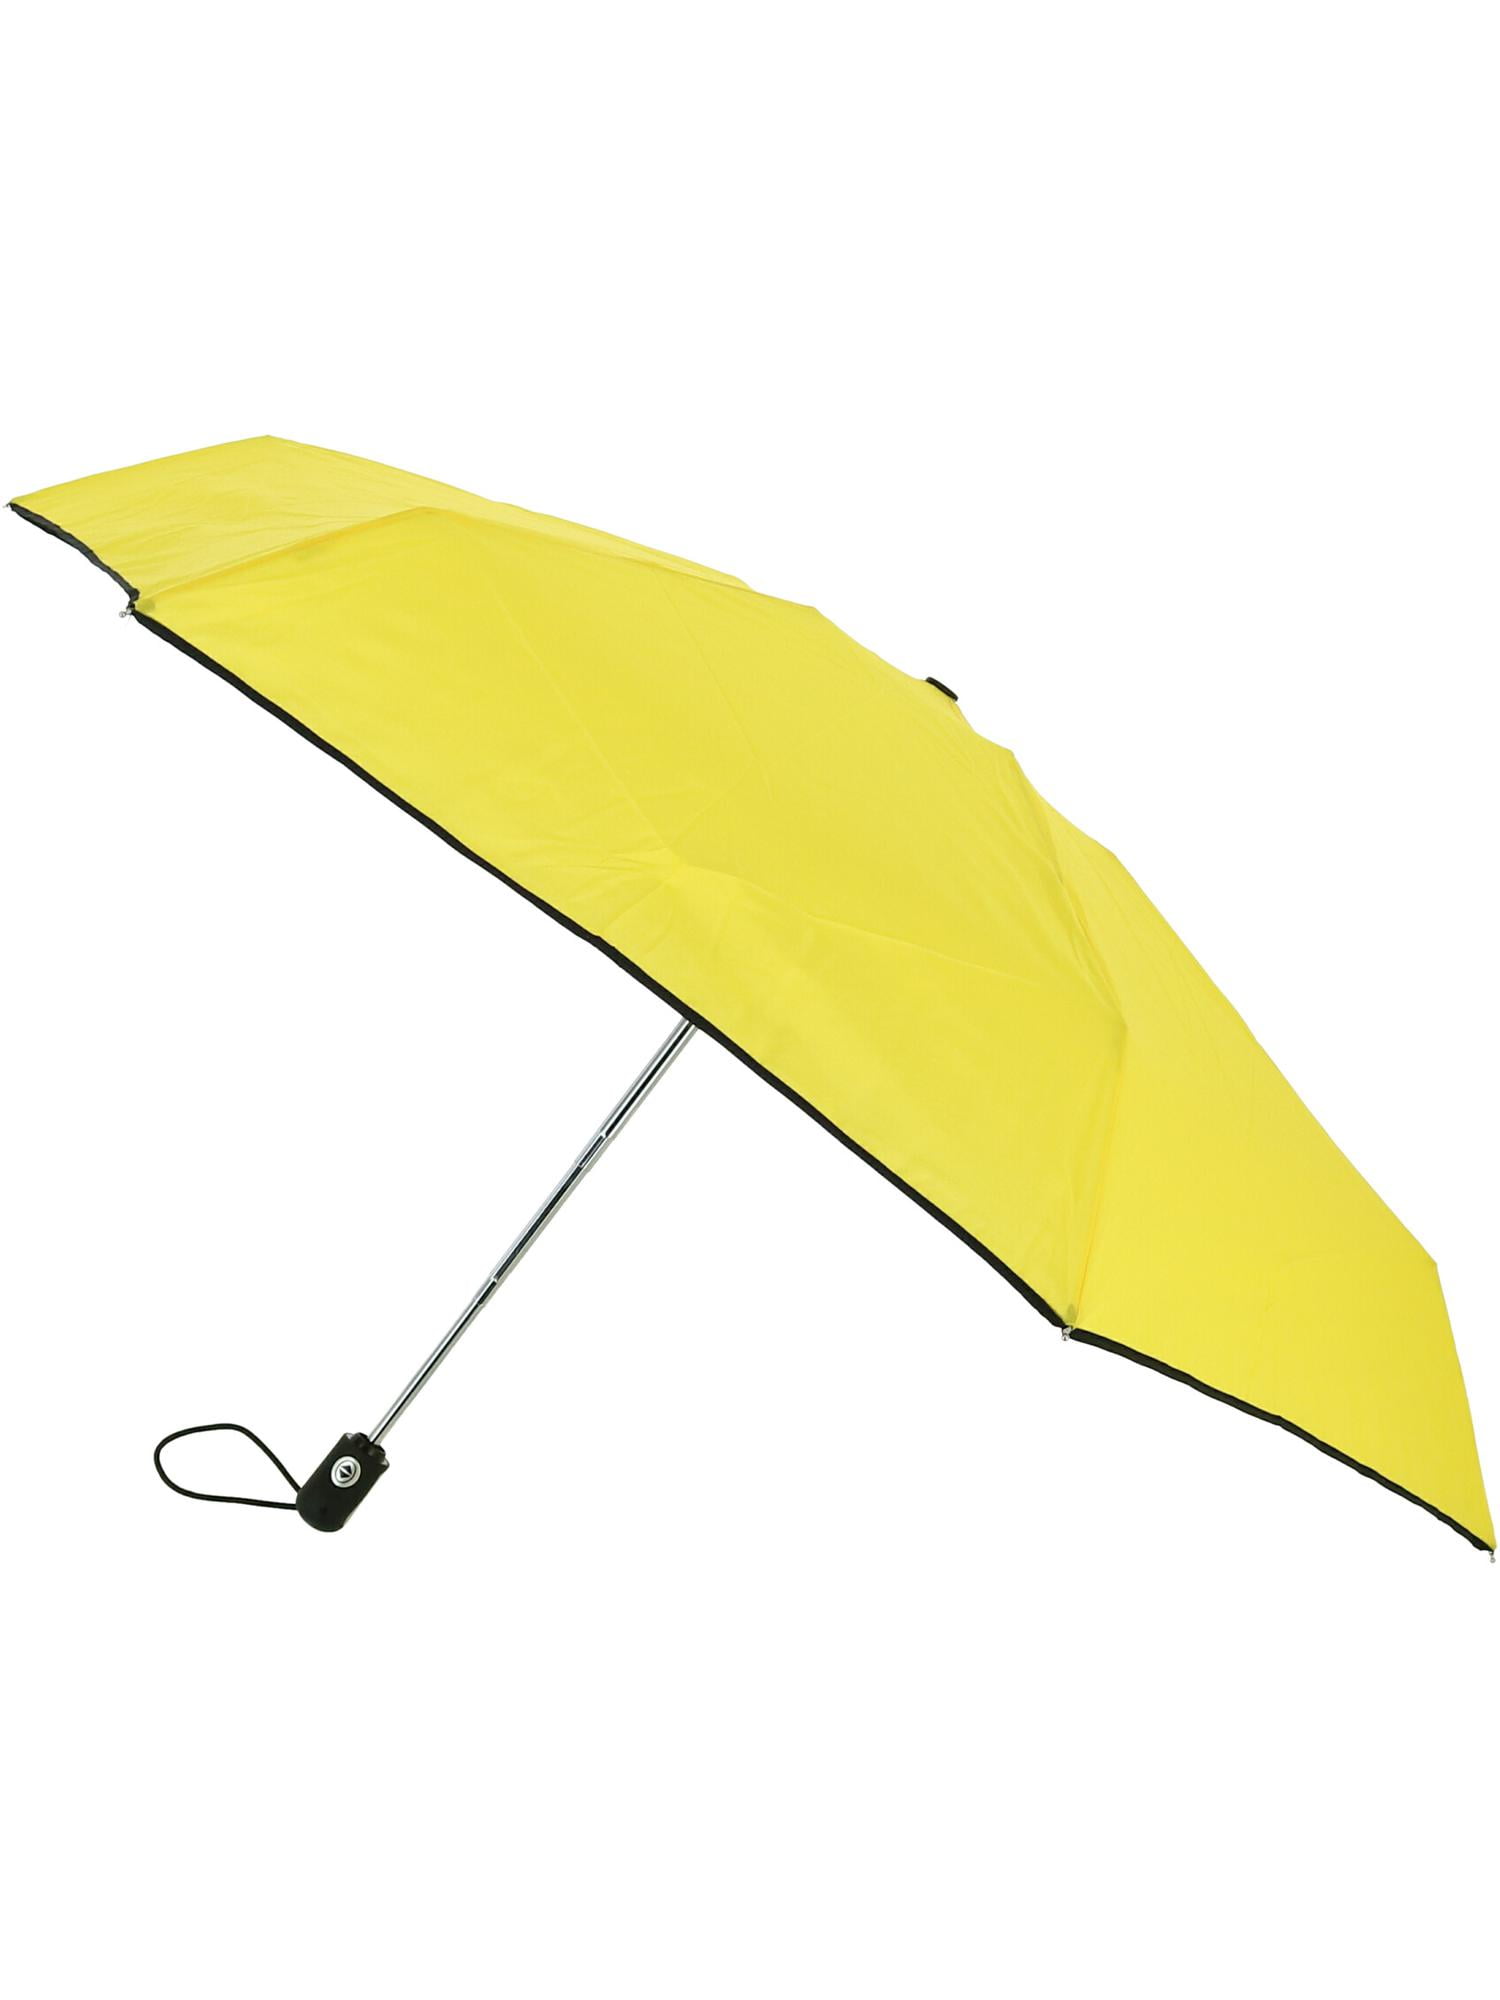 Compact 46 Inch Rain Umbrella for Men Women Auto Open Close Geometry Travel Umbrella Automatic Folding Umbrella 